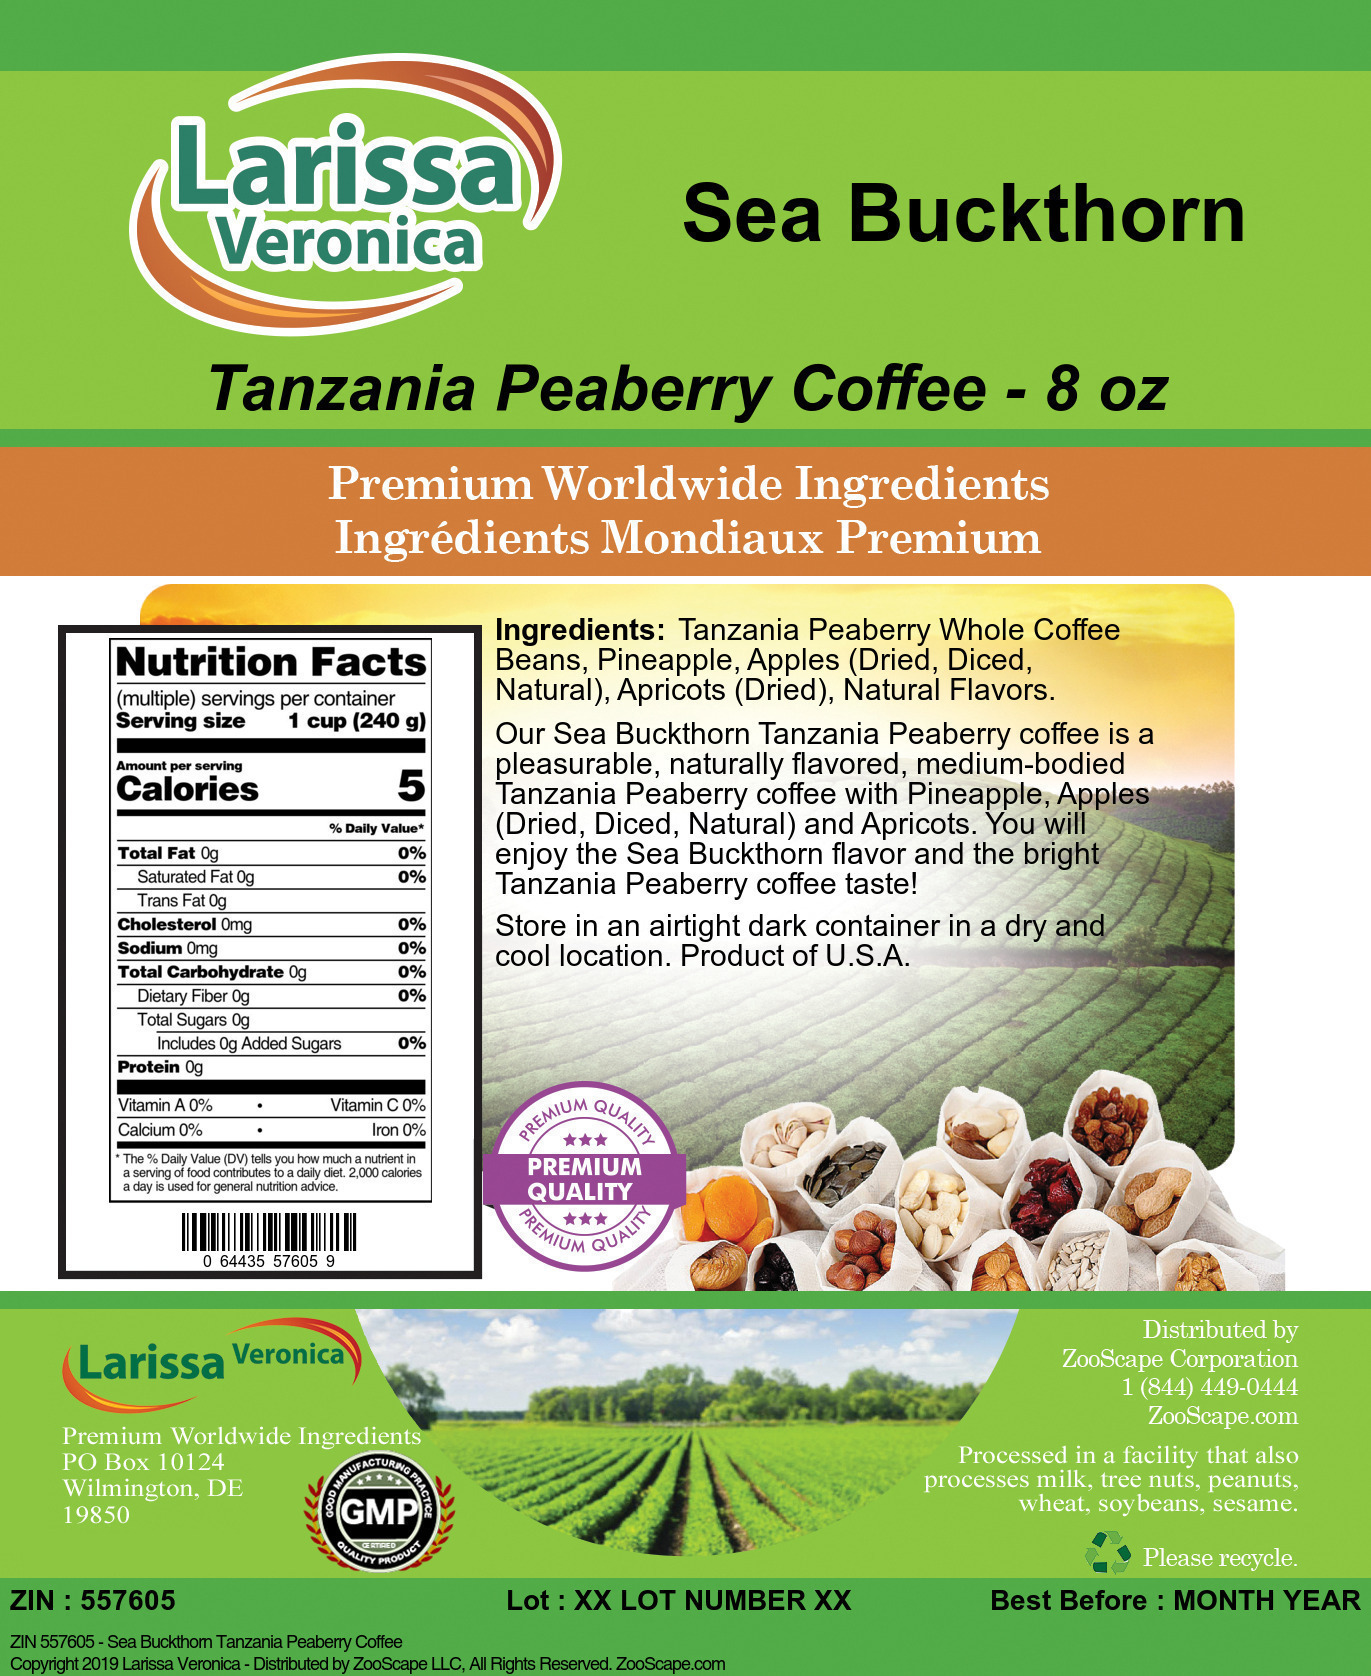 Sea Buckthorn Tanzania Peaberry Coffee - Label